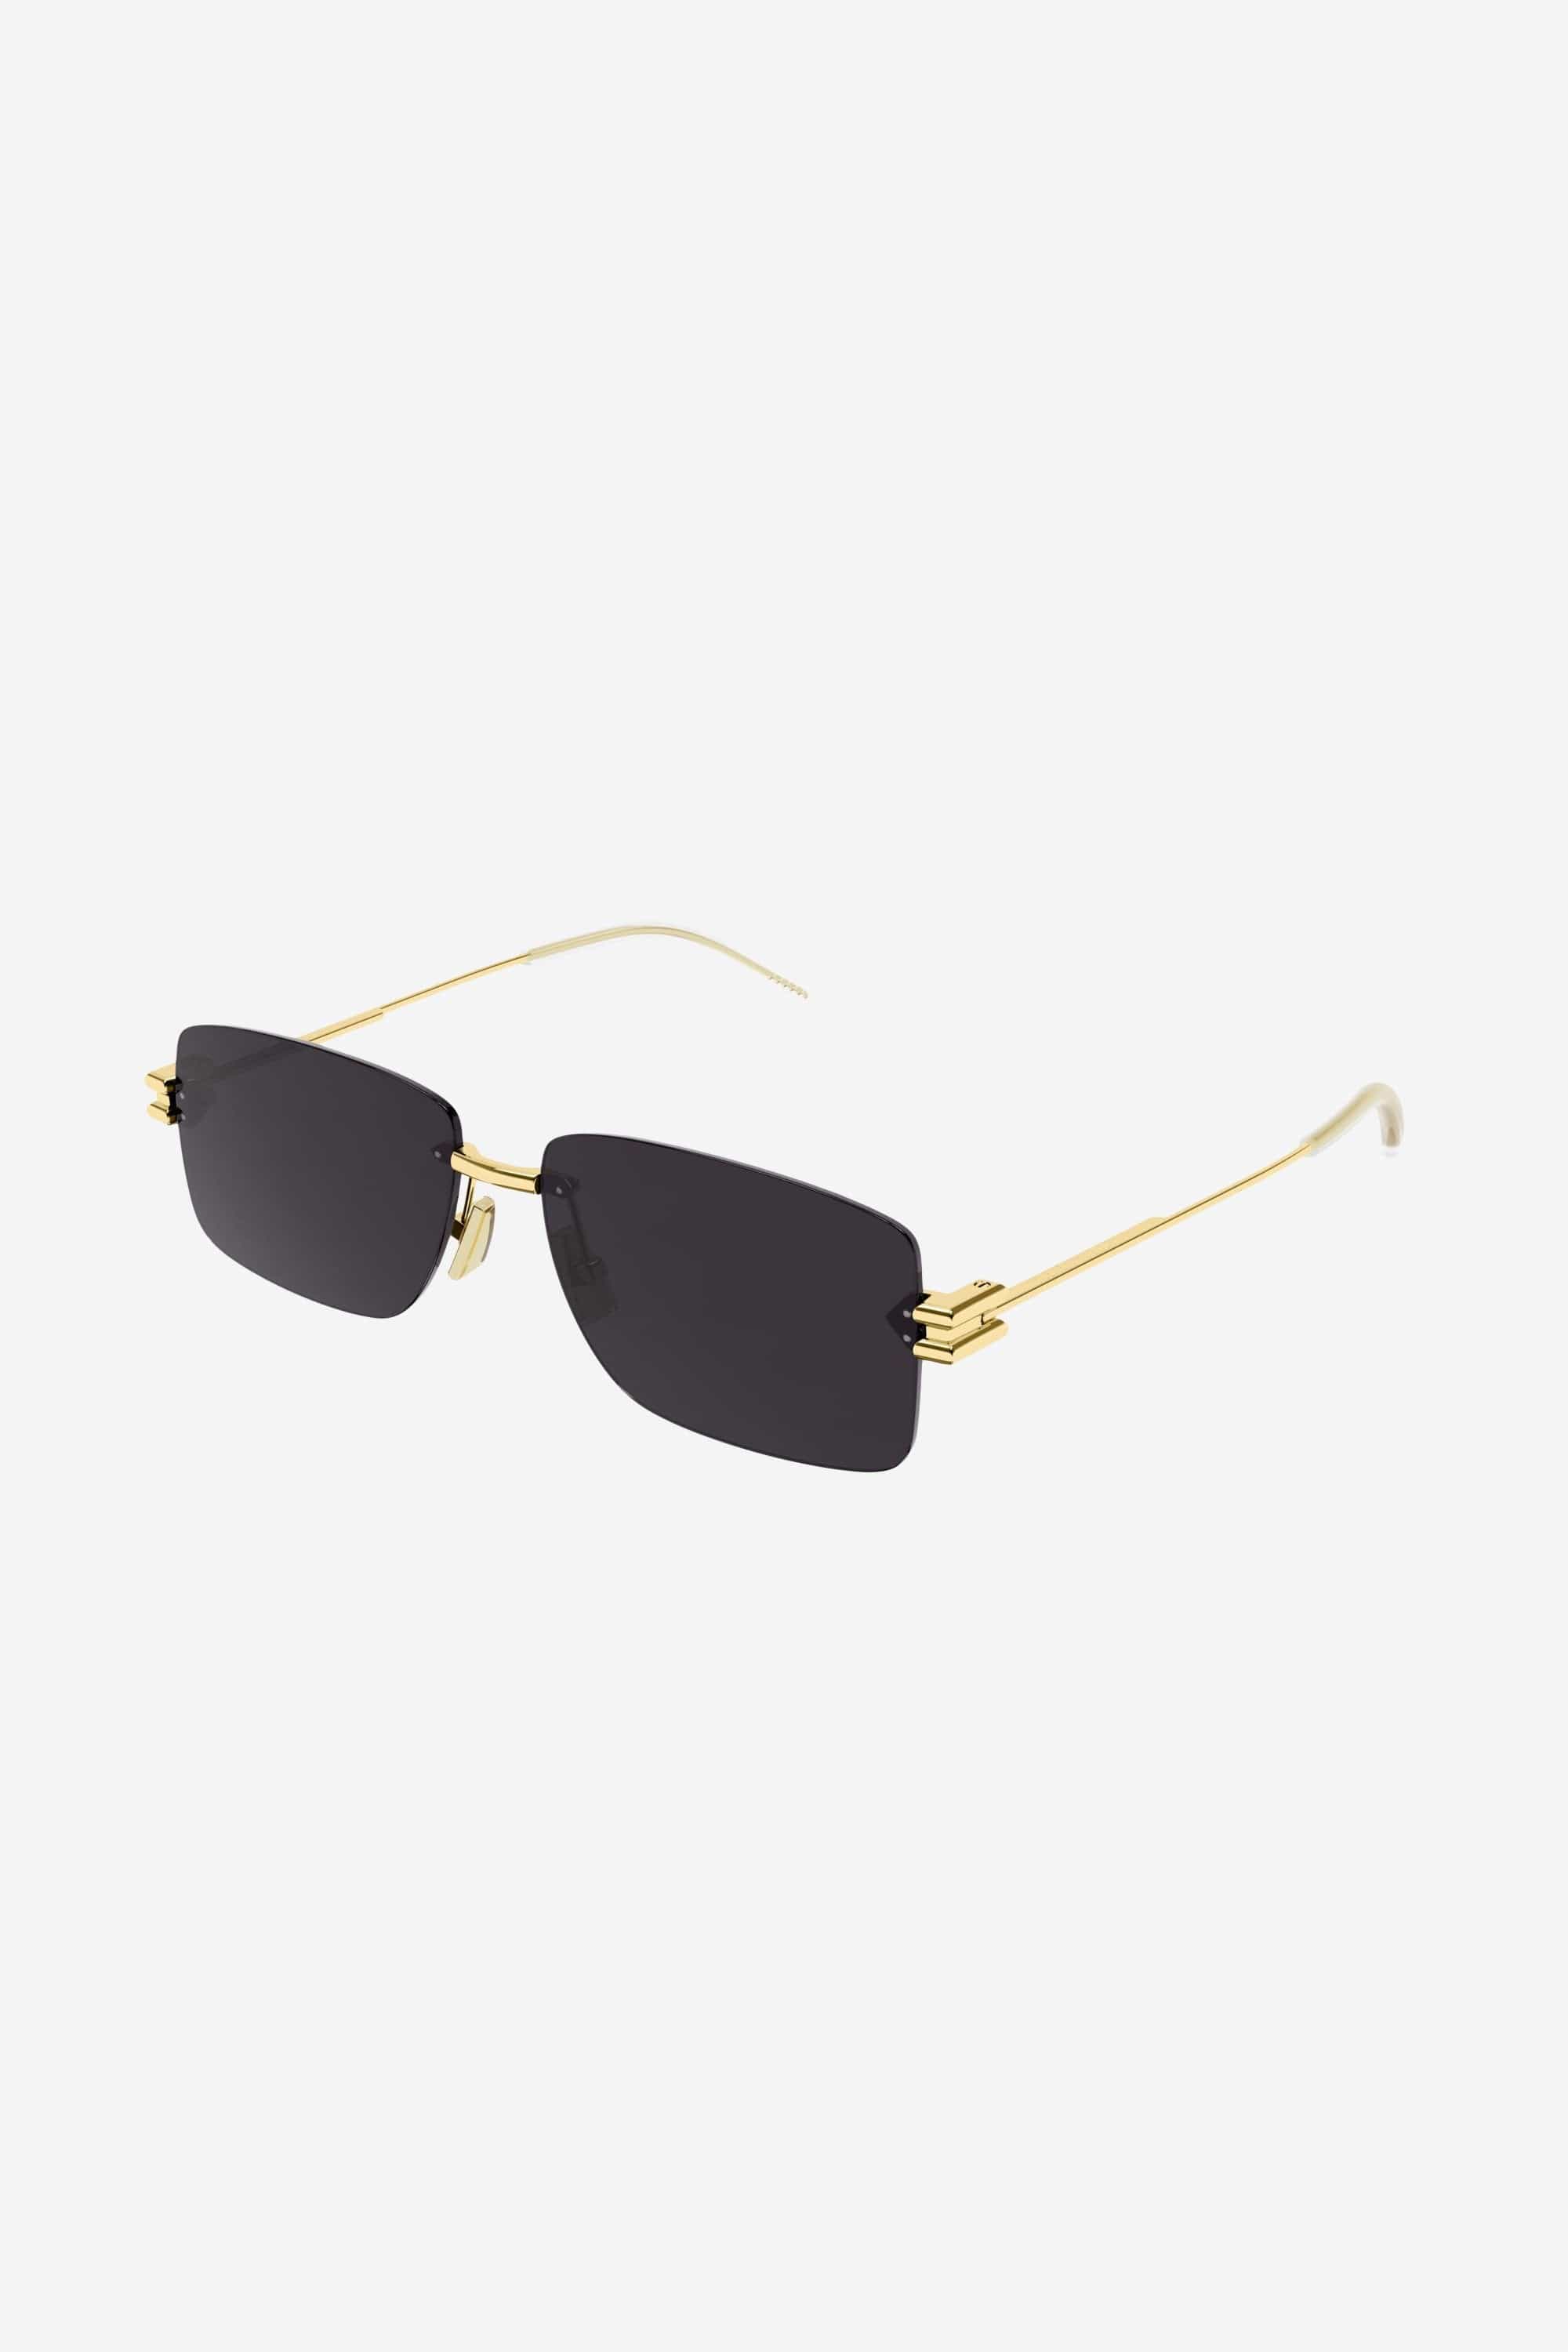 Bottega Veneta rimless brown and gold sunglasses - Eyewear Club